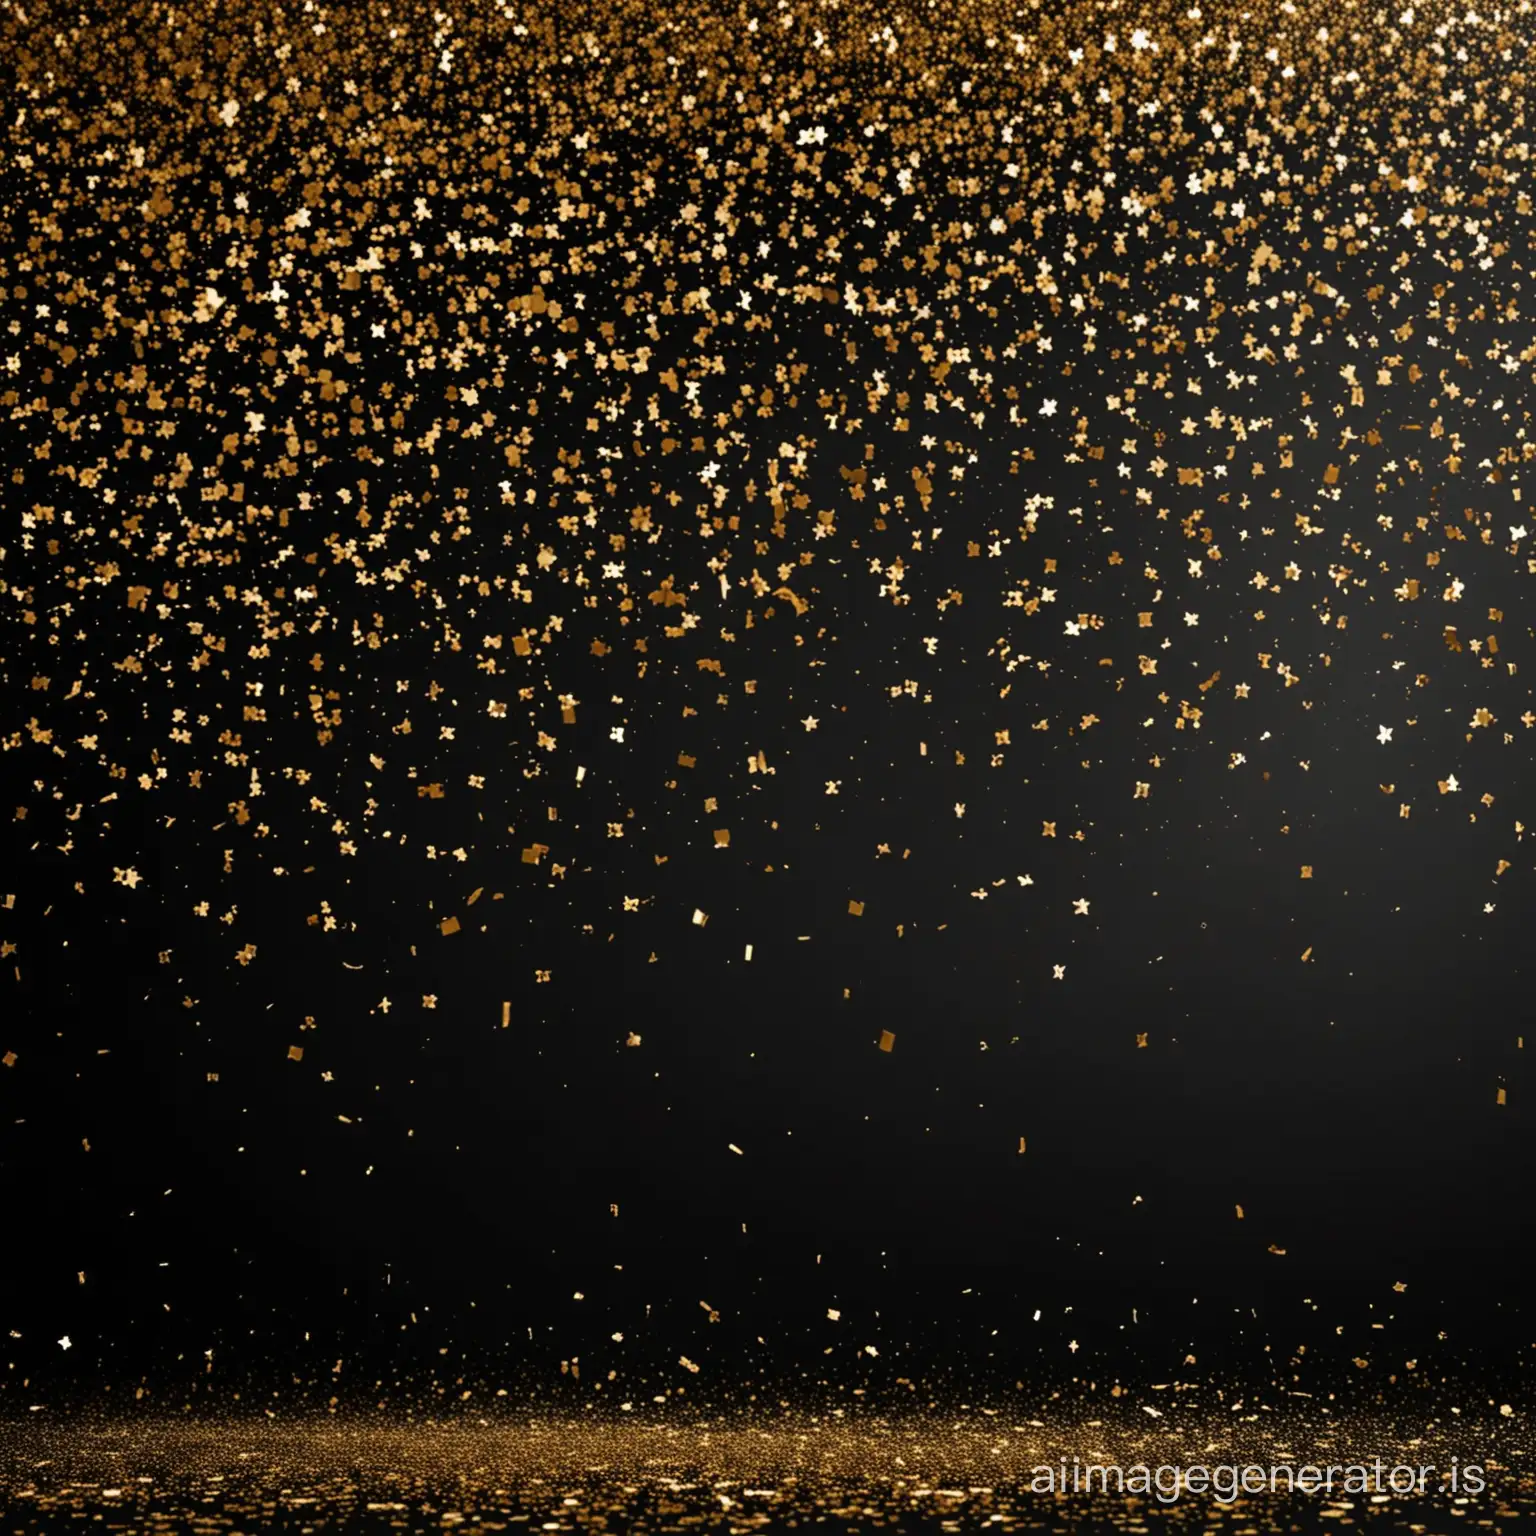 Golden-Confetti-Shower-on-Black-Background